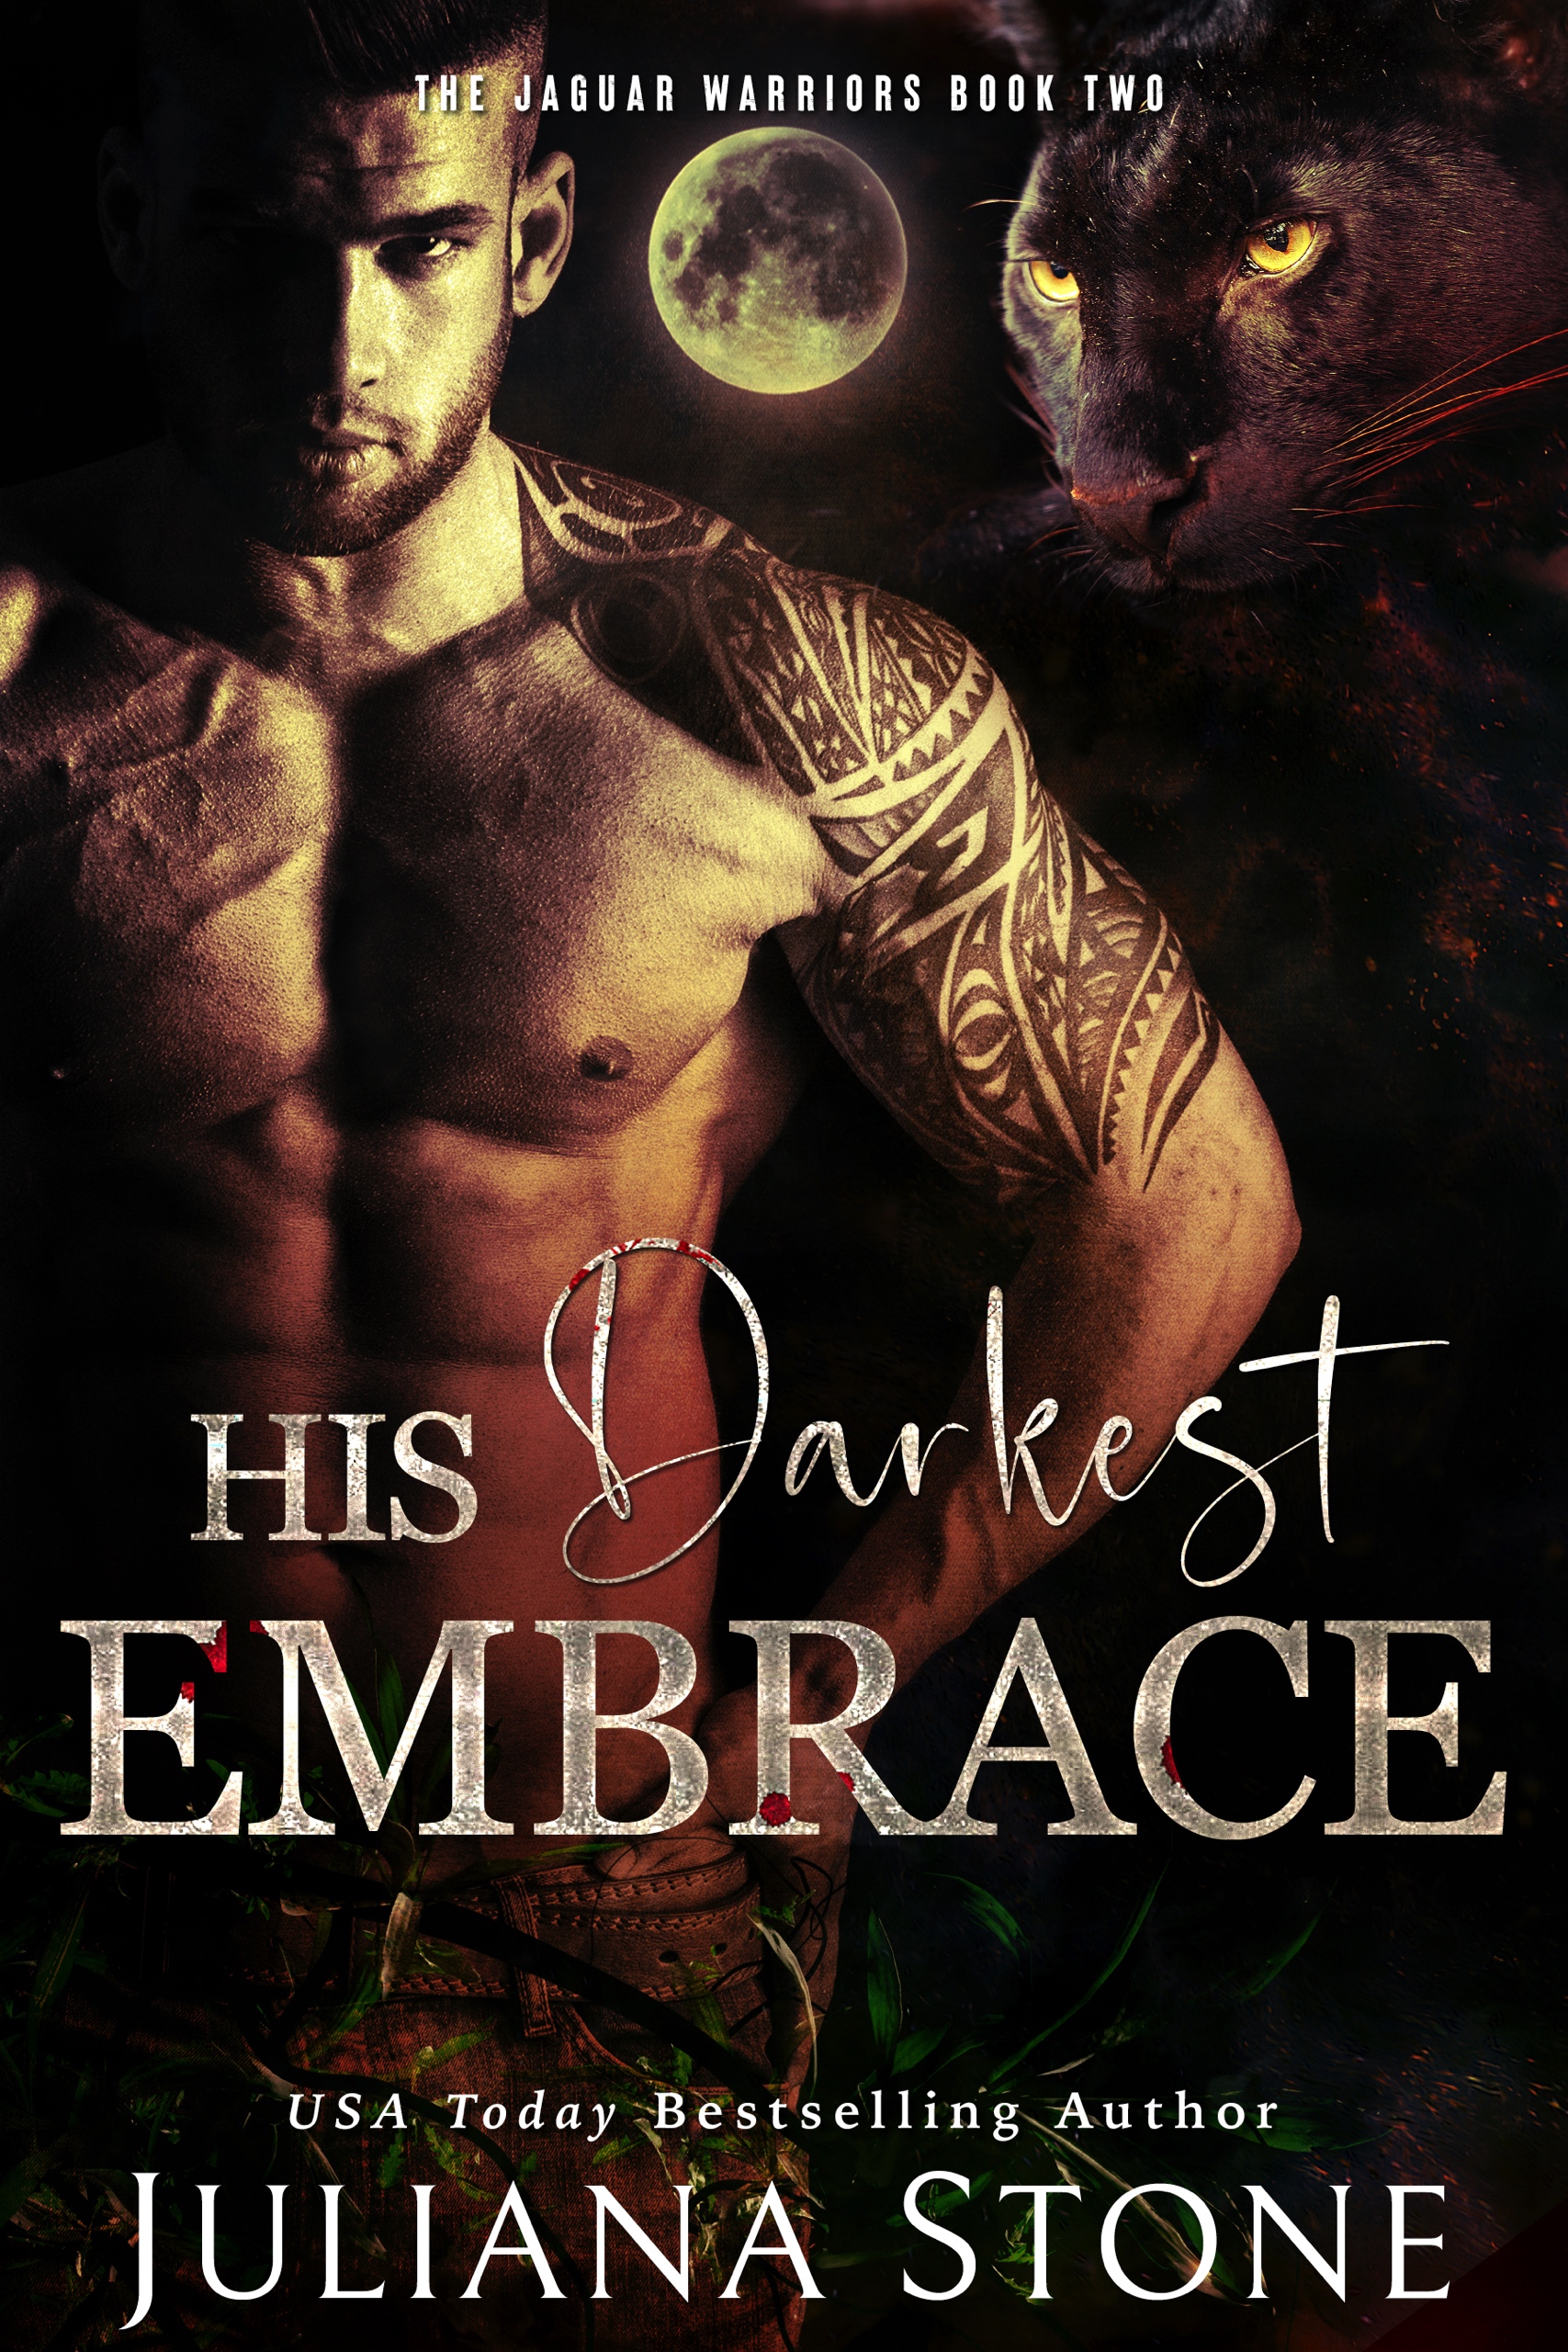 His Darkest Embrace by Juliana Stone